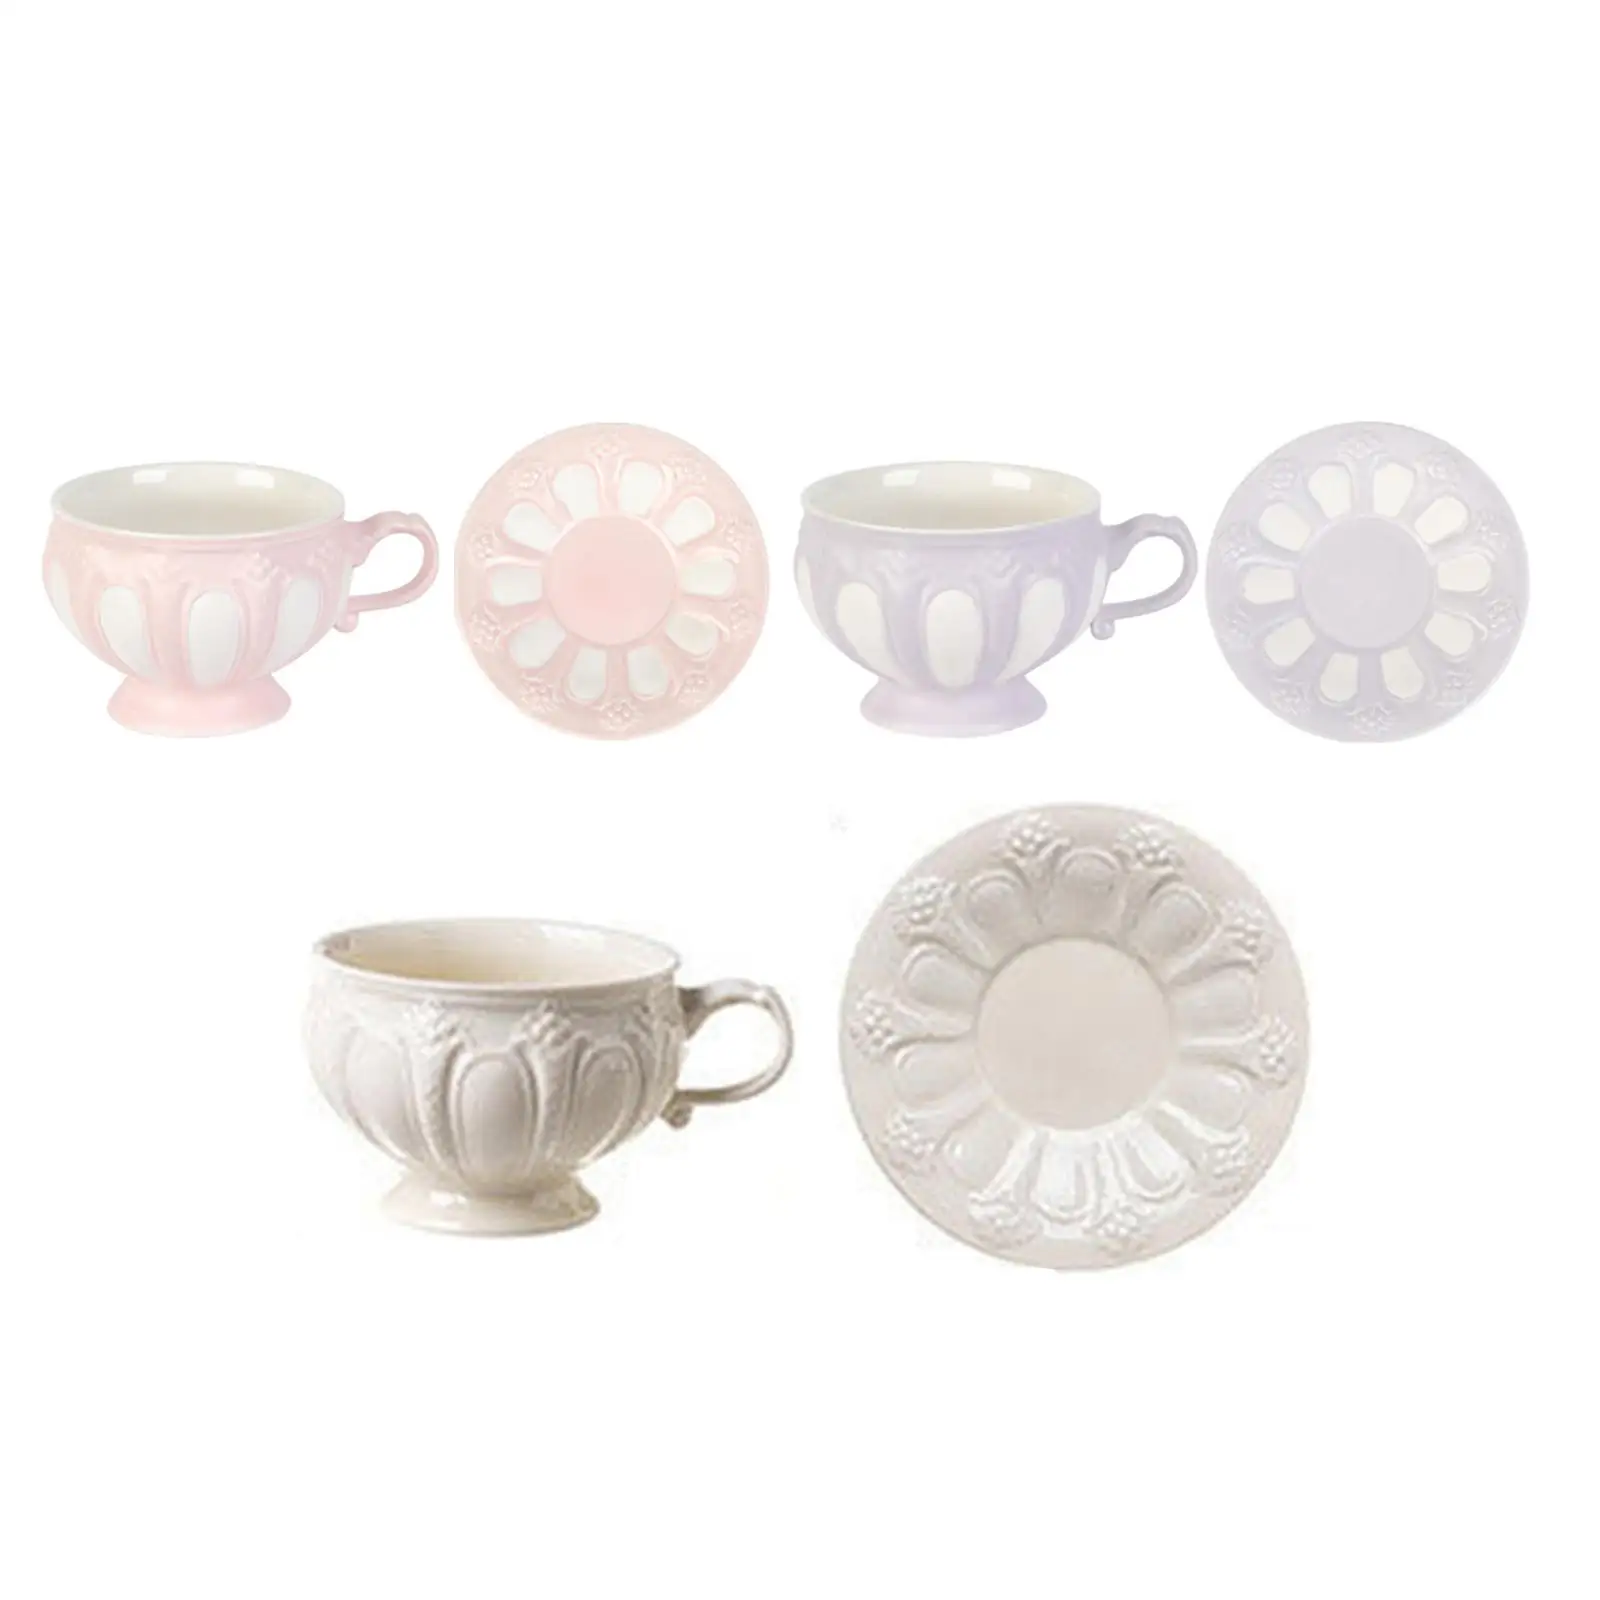 Ceramic Coffee Cup Mug Retro Birthday Gifts Tea Cup and Saucer Set for Coffee